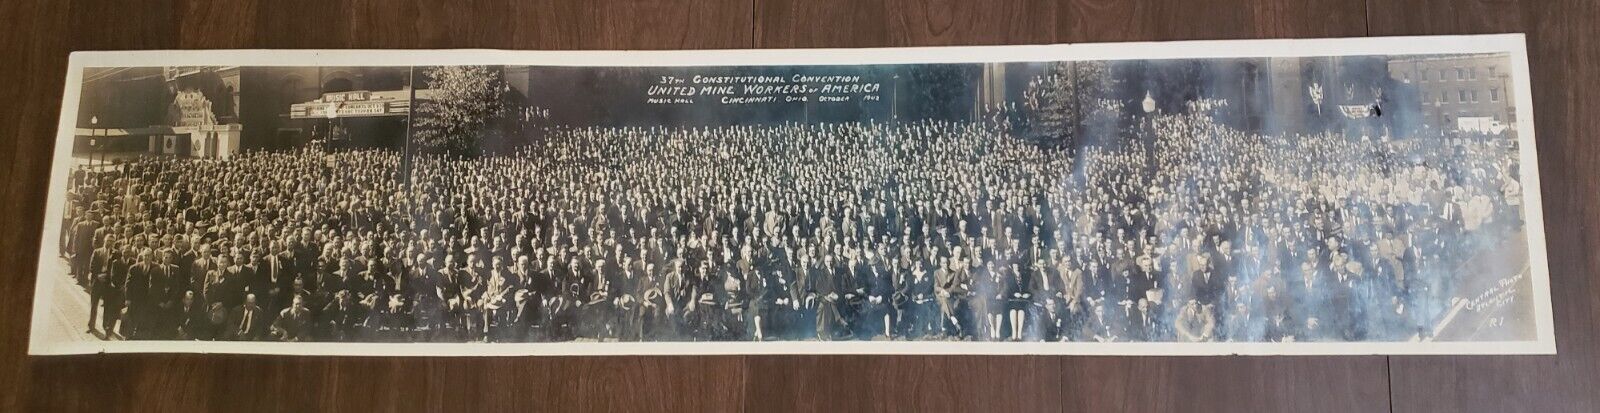 1942 Panoramic Convention Photo United Mine Workers of America Cincinnati Ohio